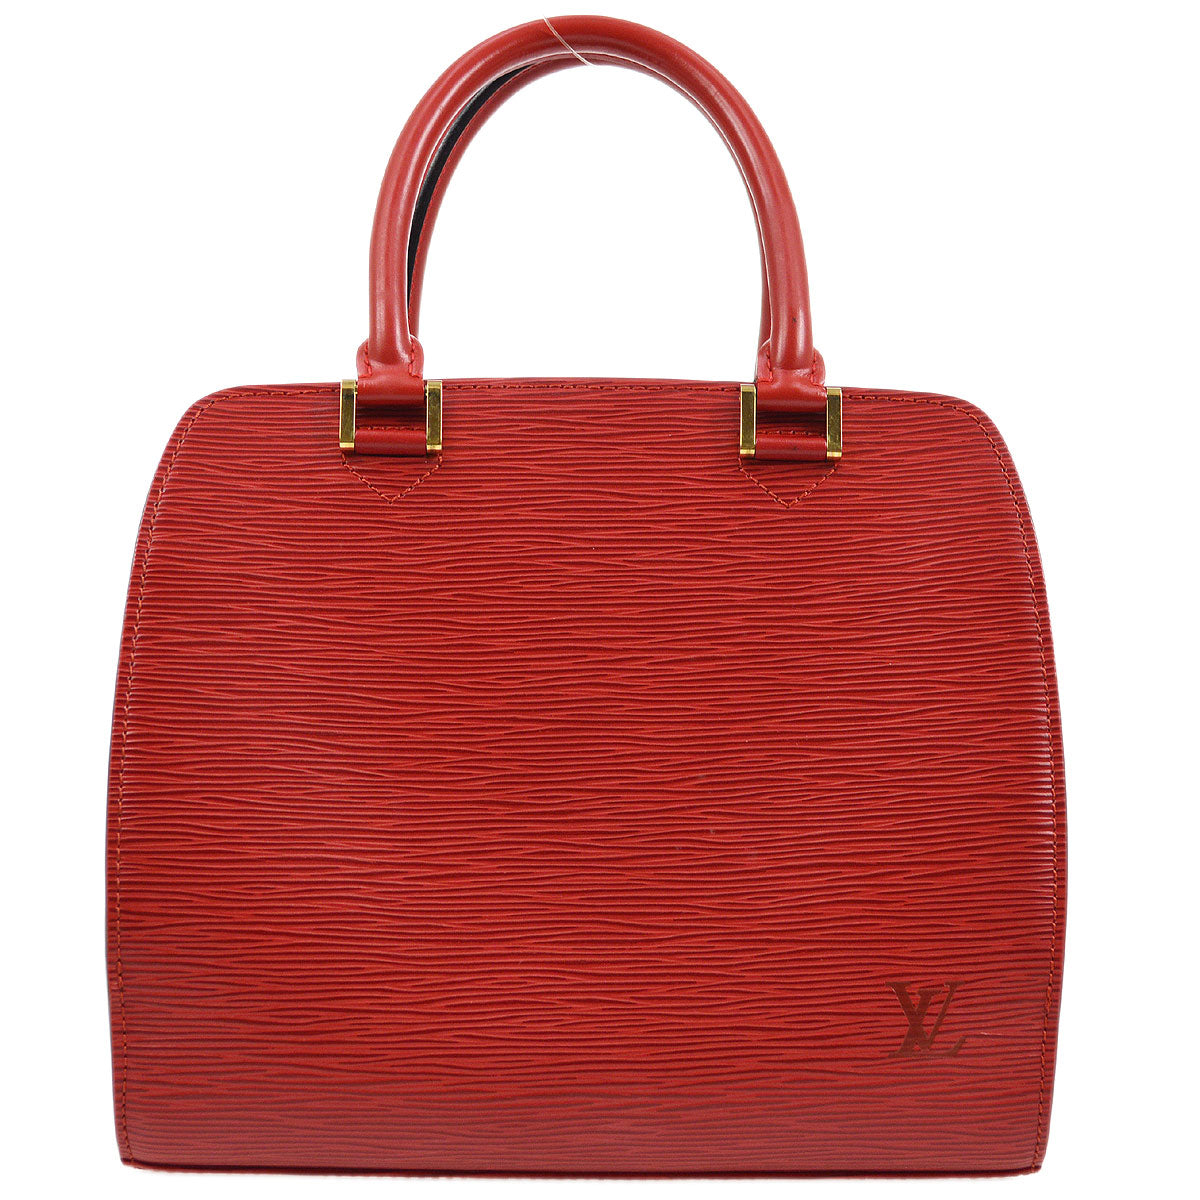 Pont neuf leather handbag Louis Vuitton Multicolour in Leather